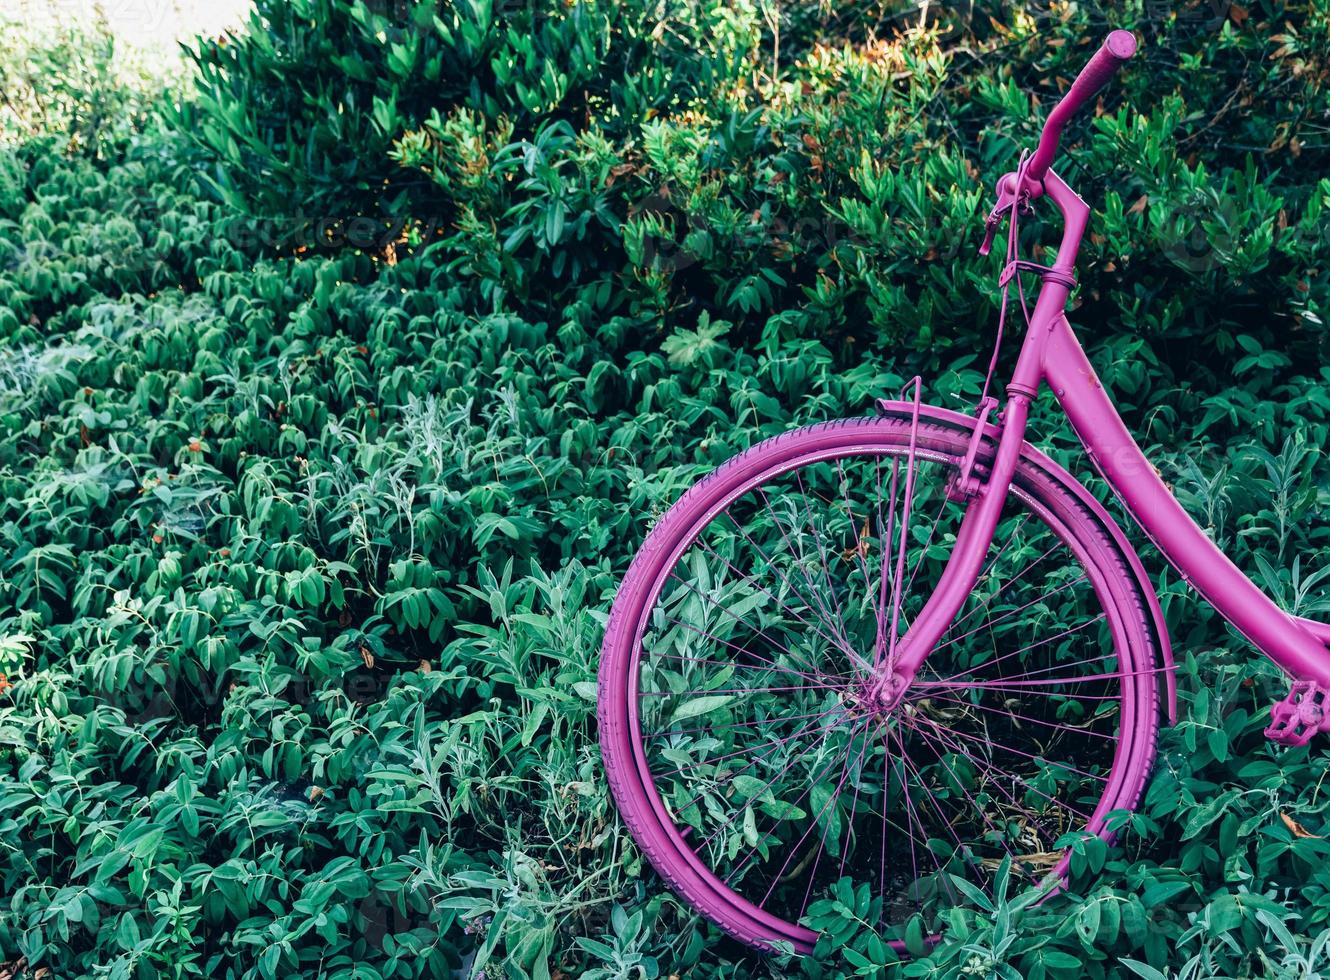 Rosa lackiertes Fahrrad in einer Hecke foto